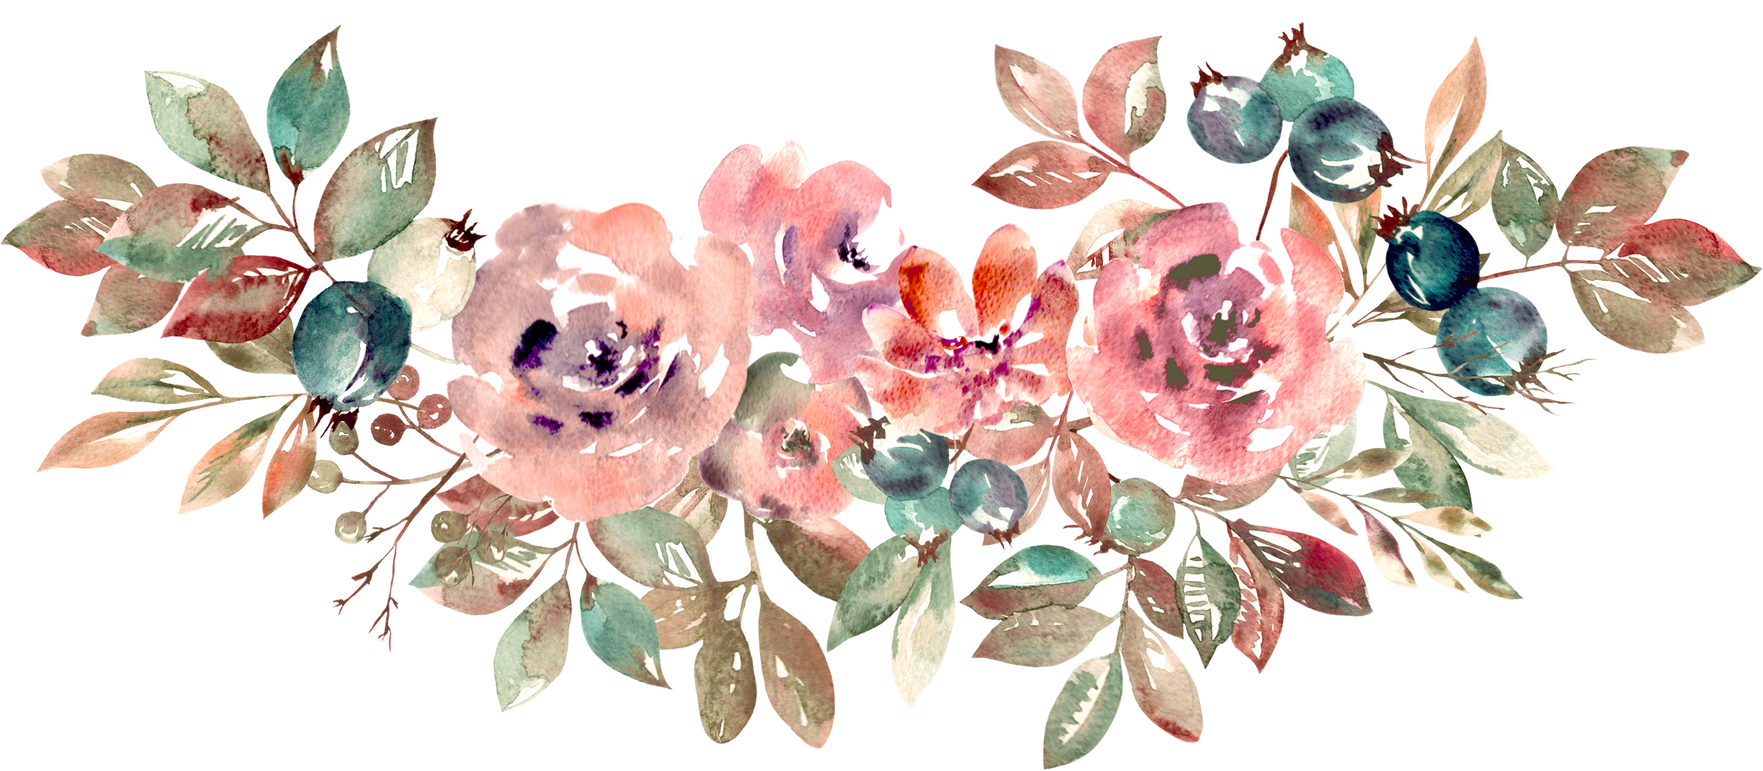 Illustration of Flowers